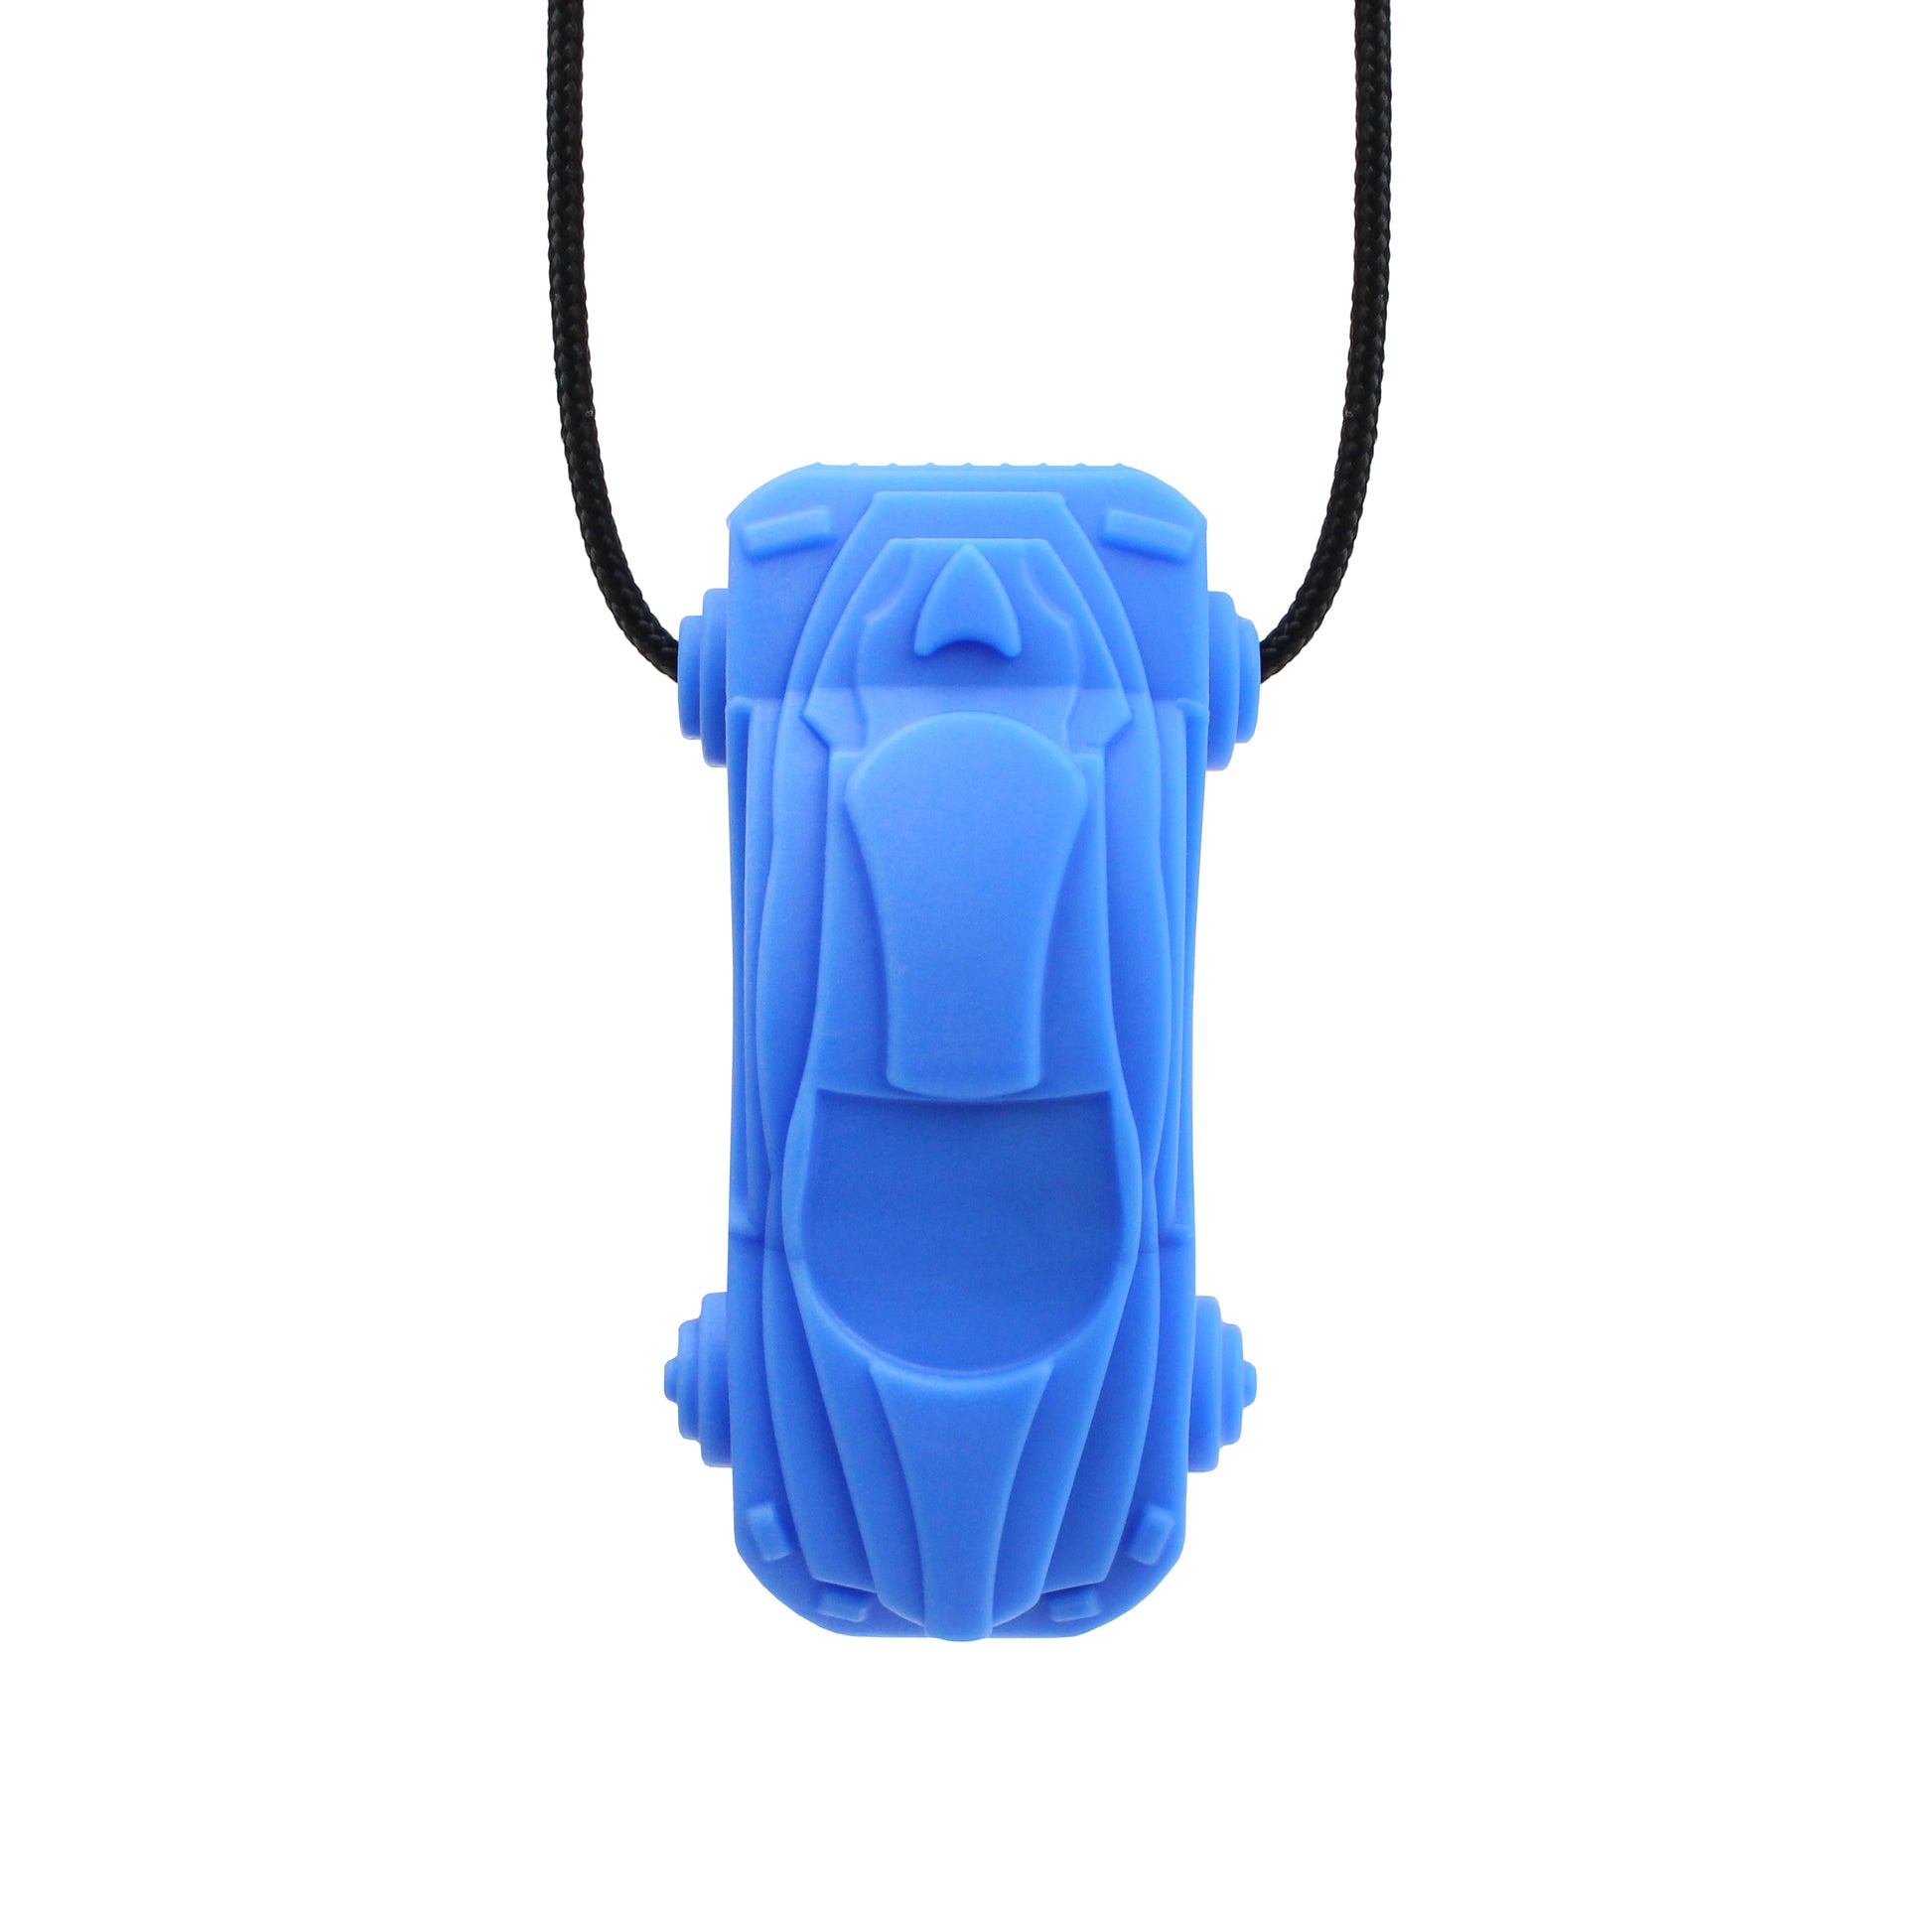 ARK Race-car chew necklace Royal Blue